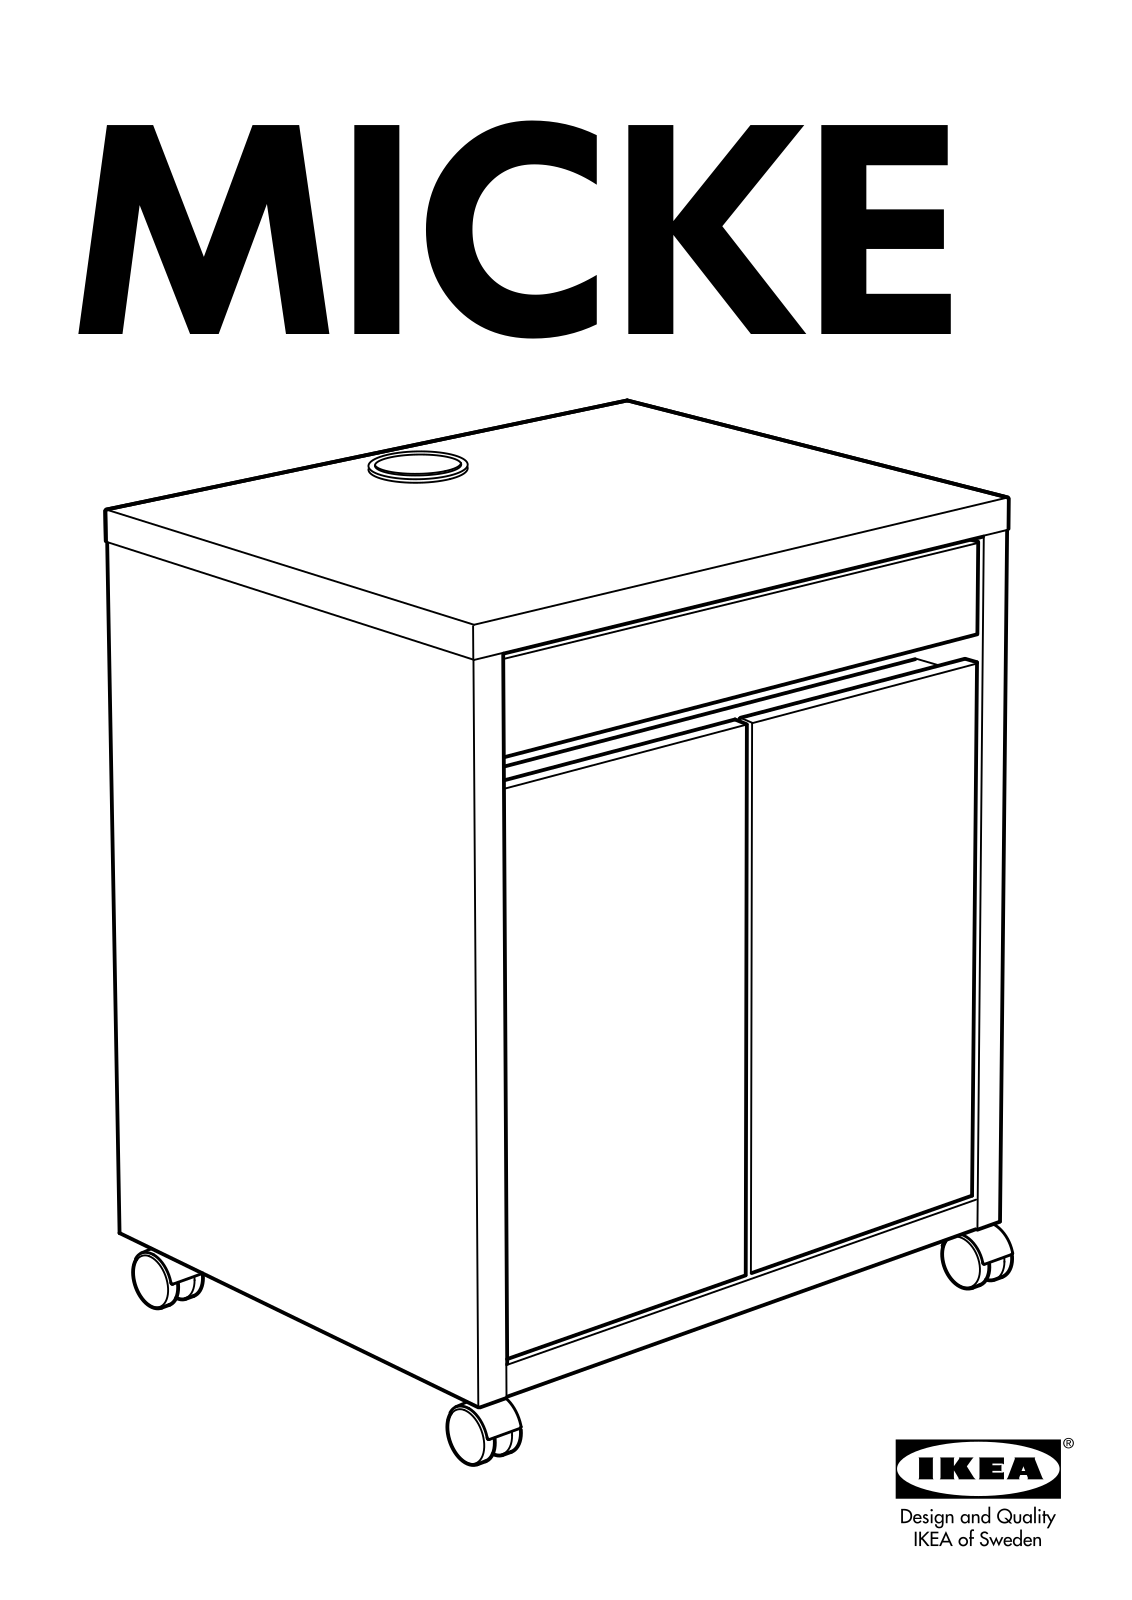 IKEA MICKE STORAGE UNIT FOR PRINTER 24x29 User Manual